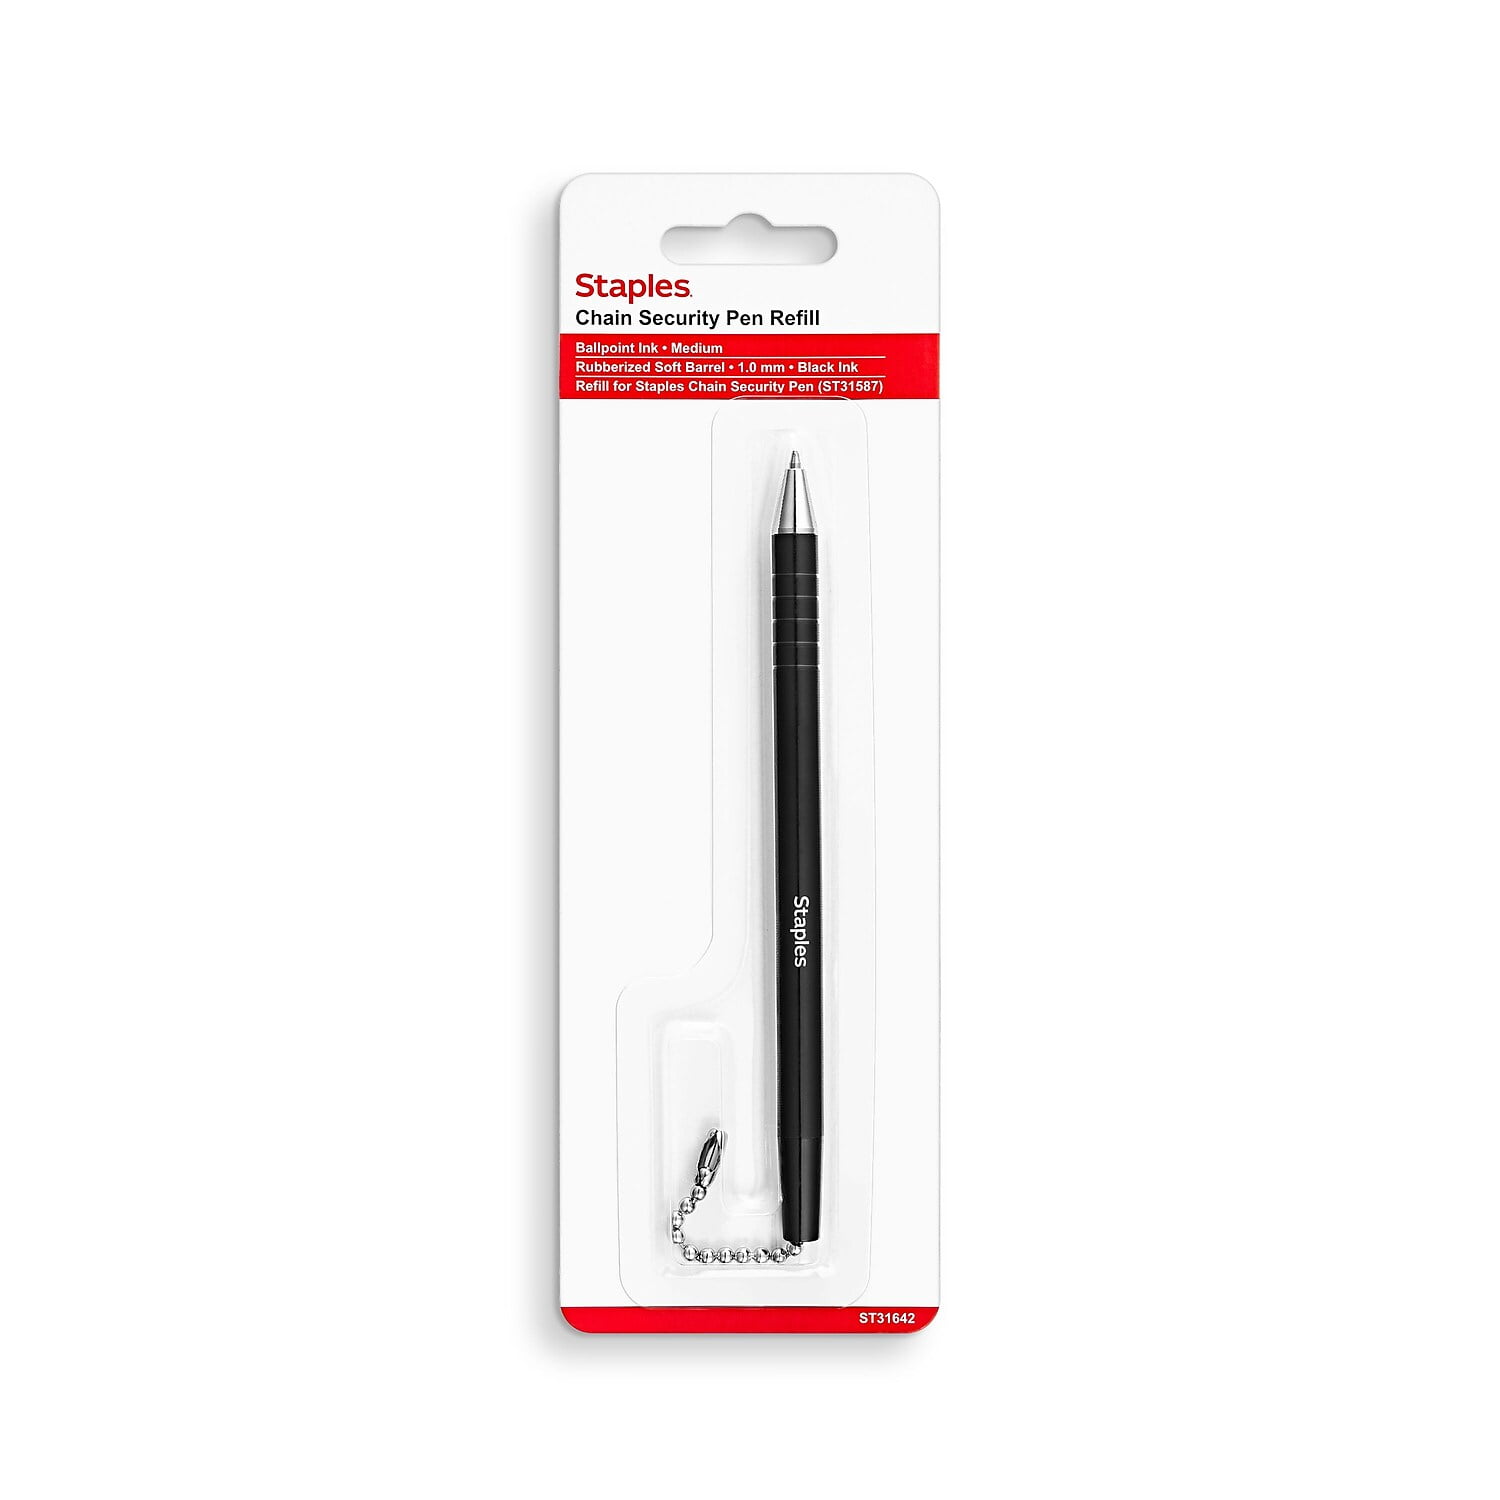 Ballpoint Pen Refill - Black